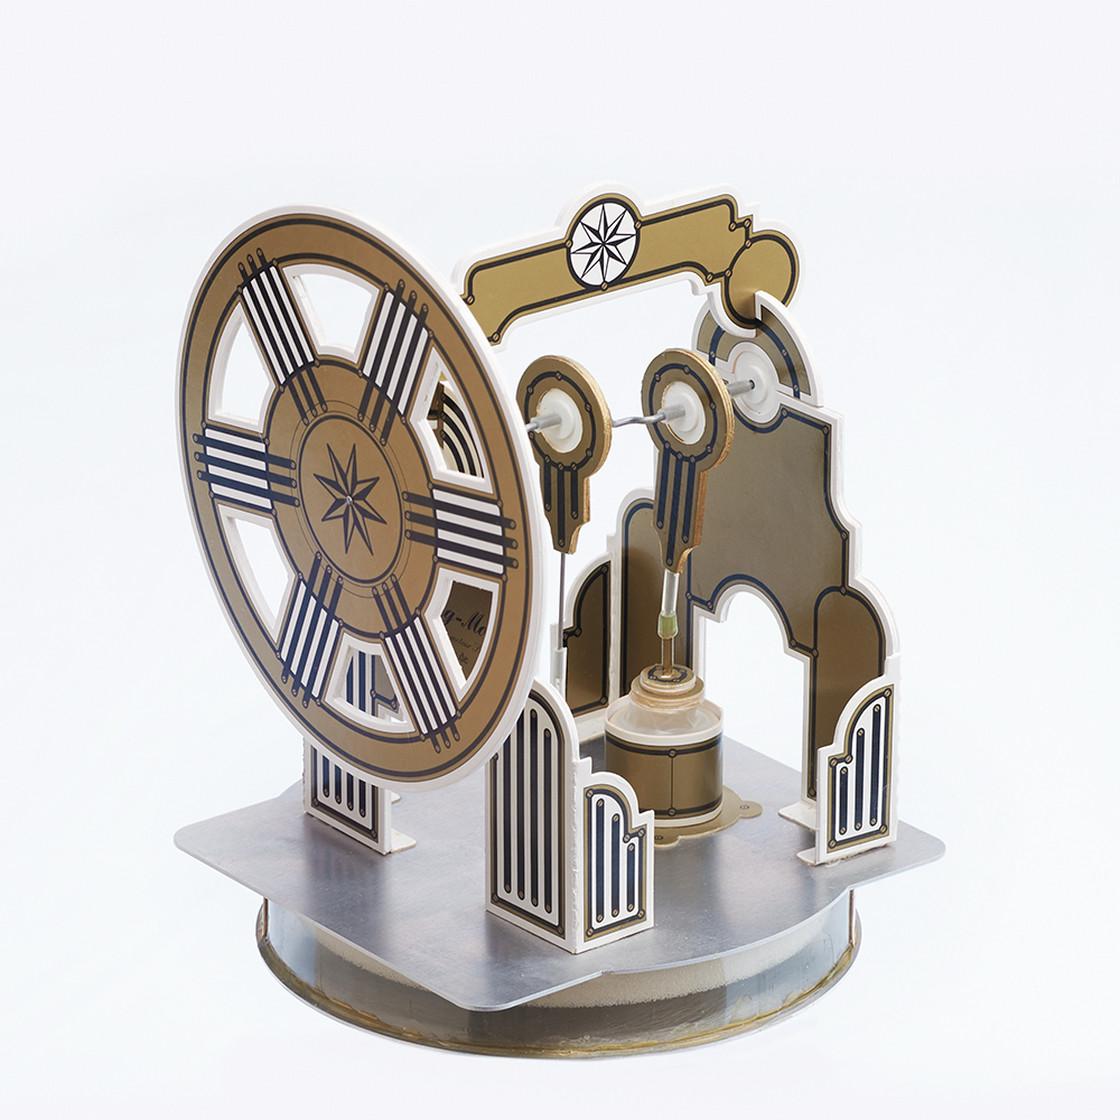 Image for Cardboard Stirling Engine Kit - exergia